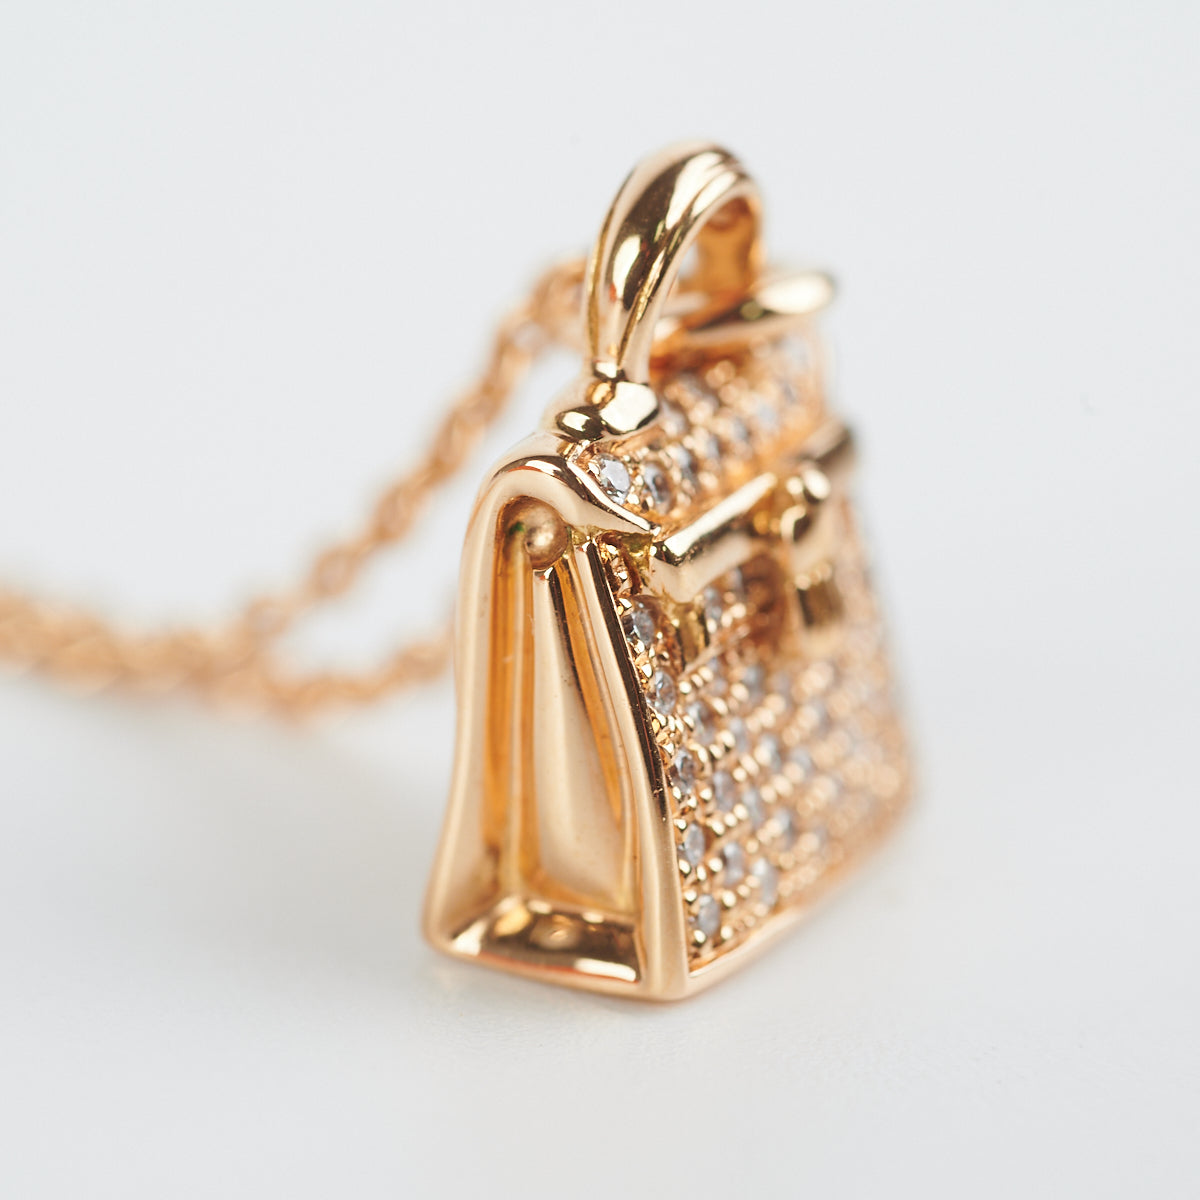 Hermès Amulette Birkin diamonds and gold necklace